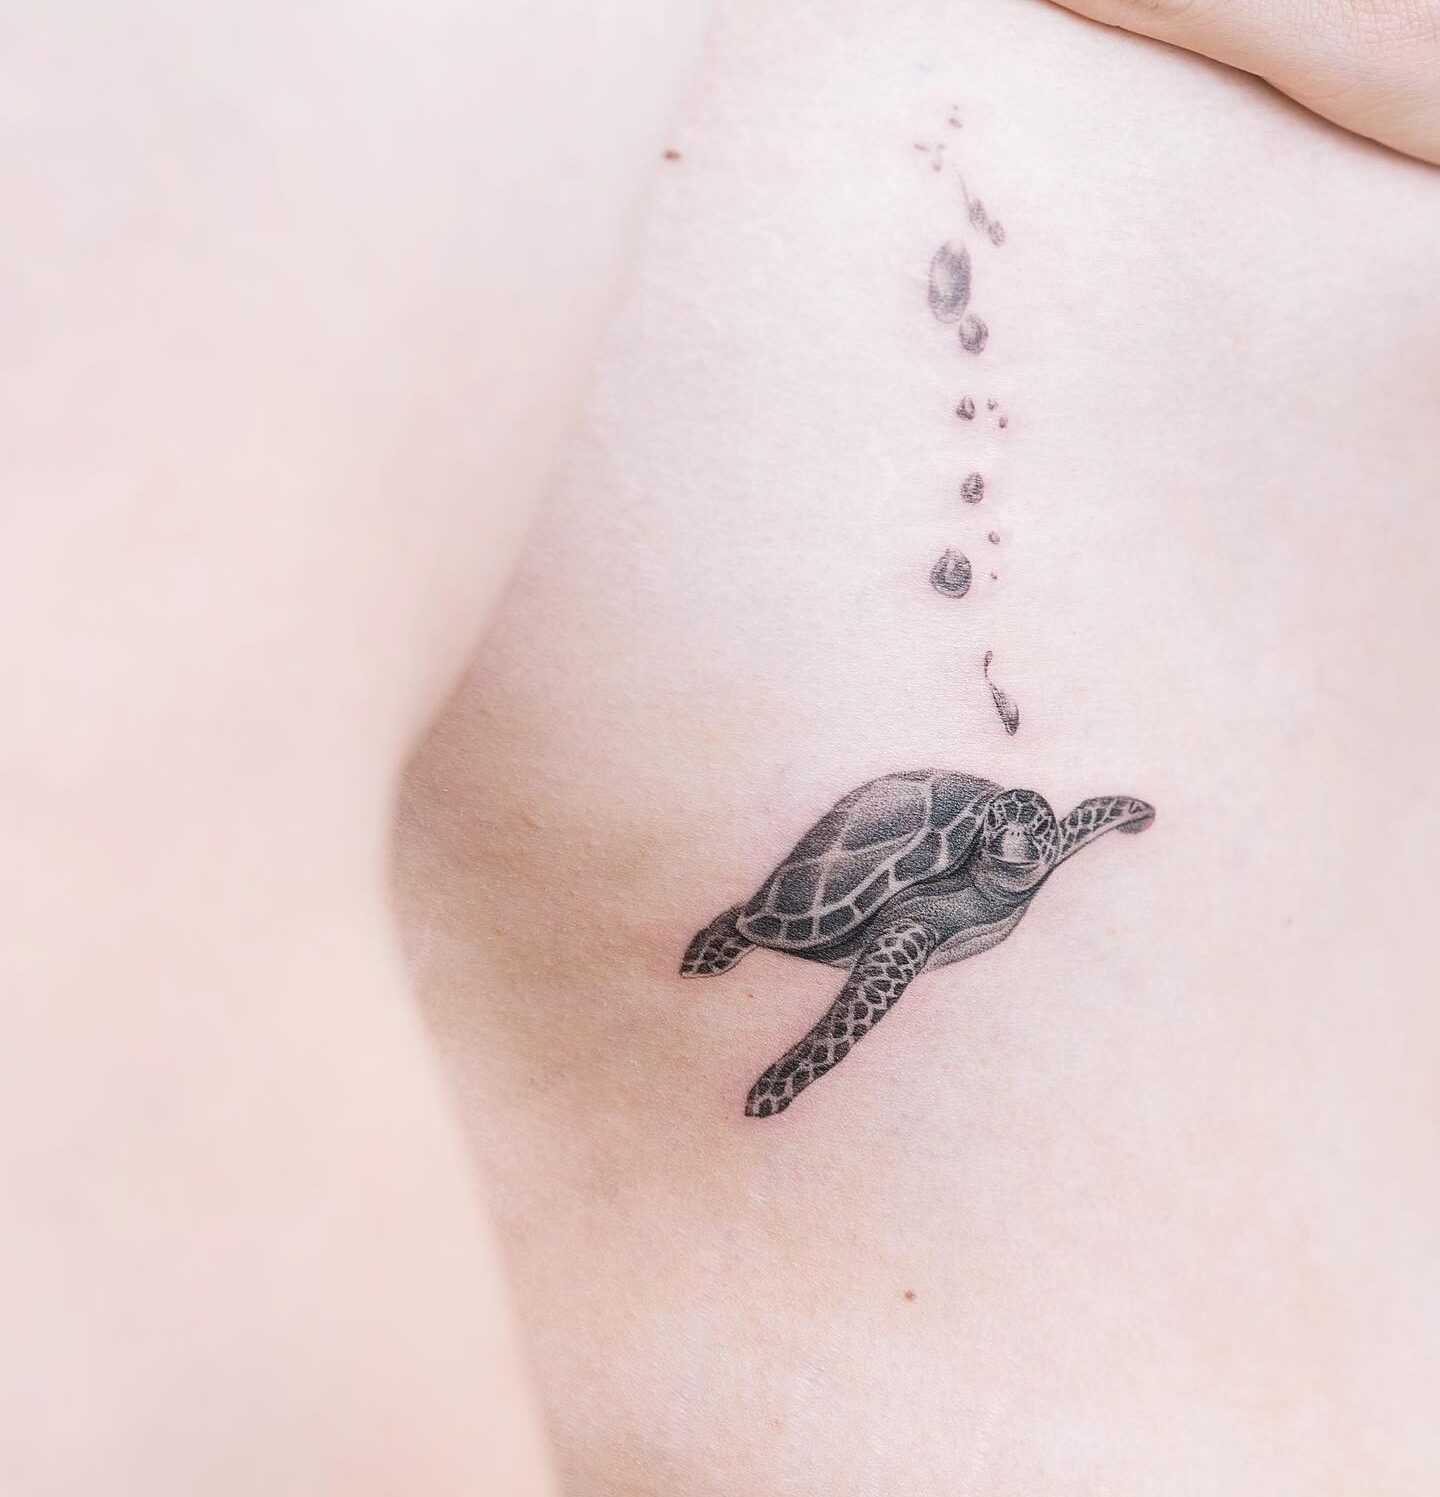 Micro-realistic turtle tattoo on the ribs